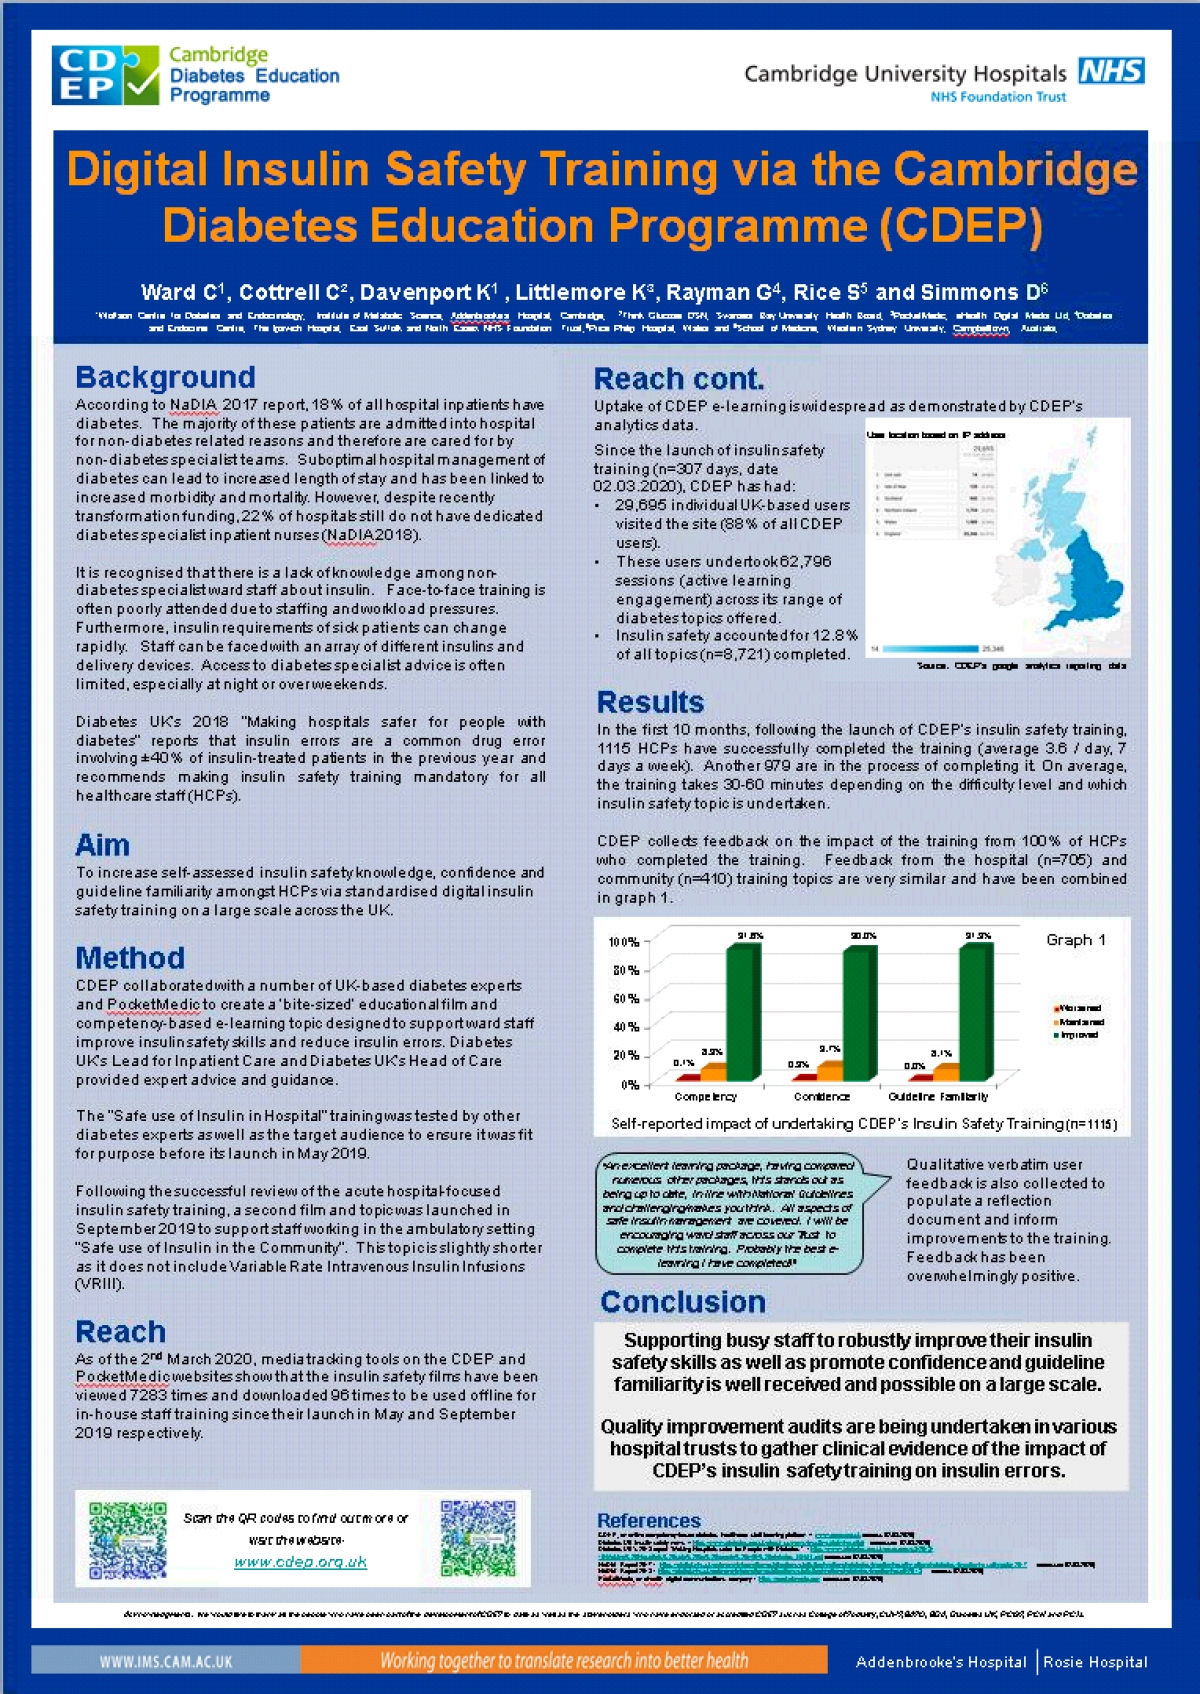 CDEPs Diabetes UK APC 2020 Poster On Digital Insulin Safety Training